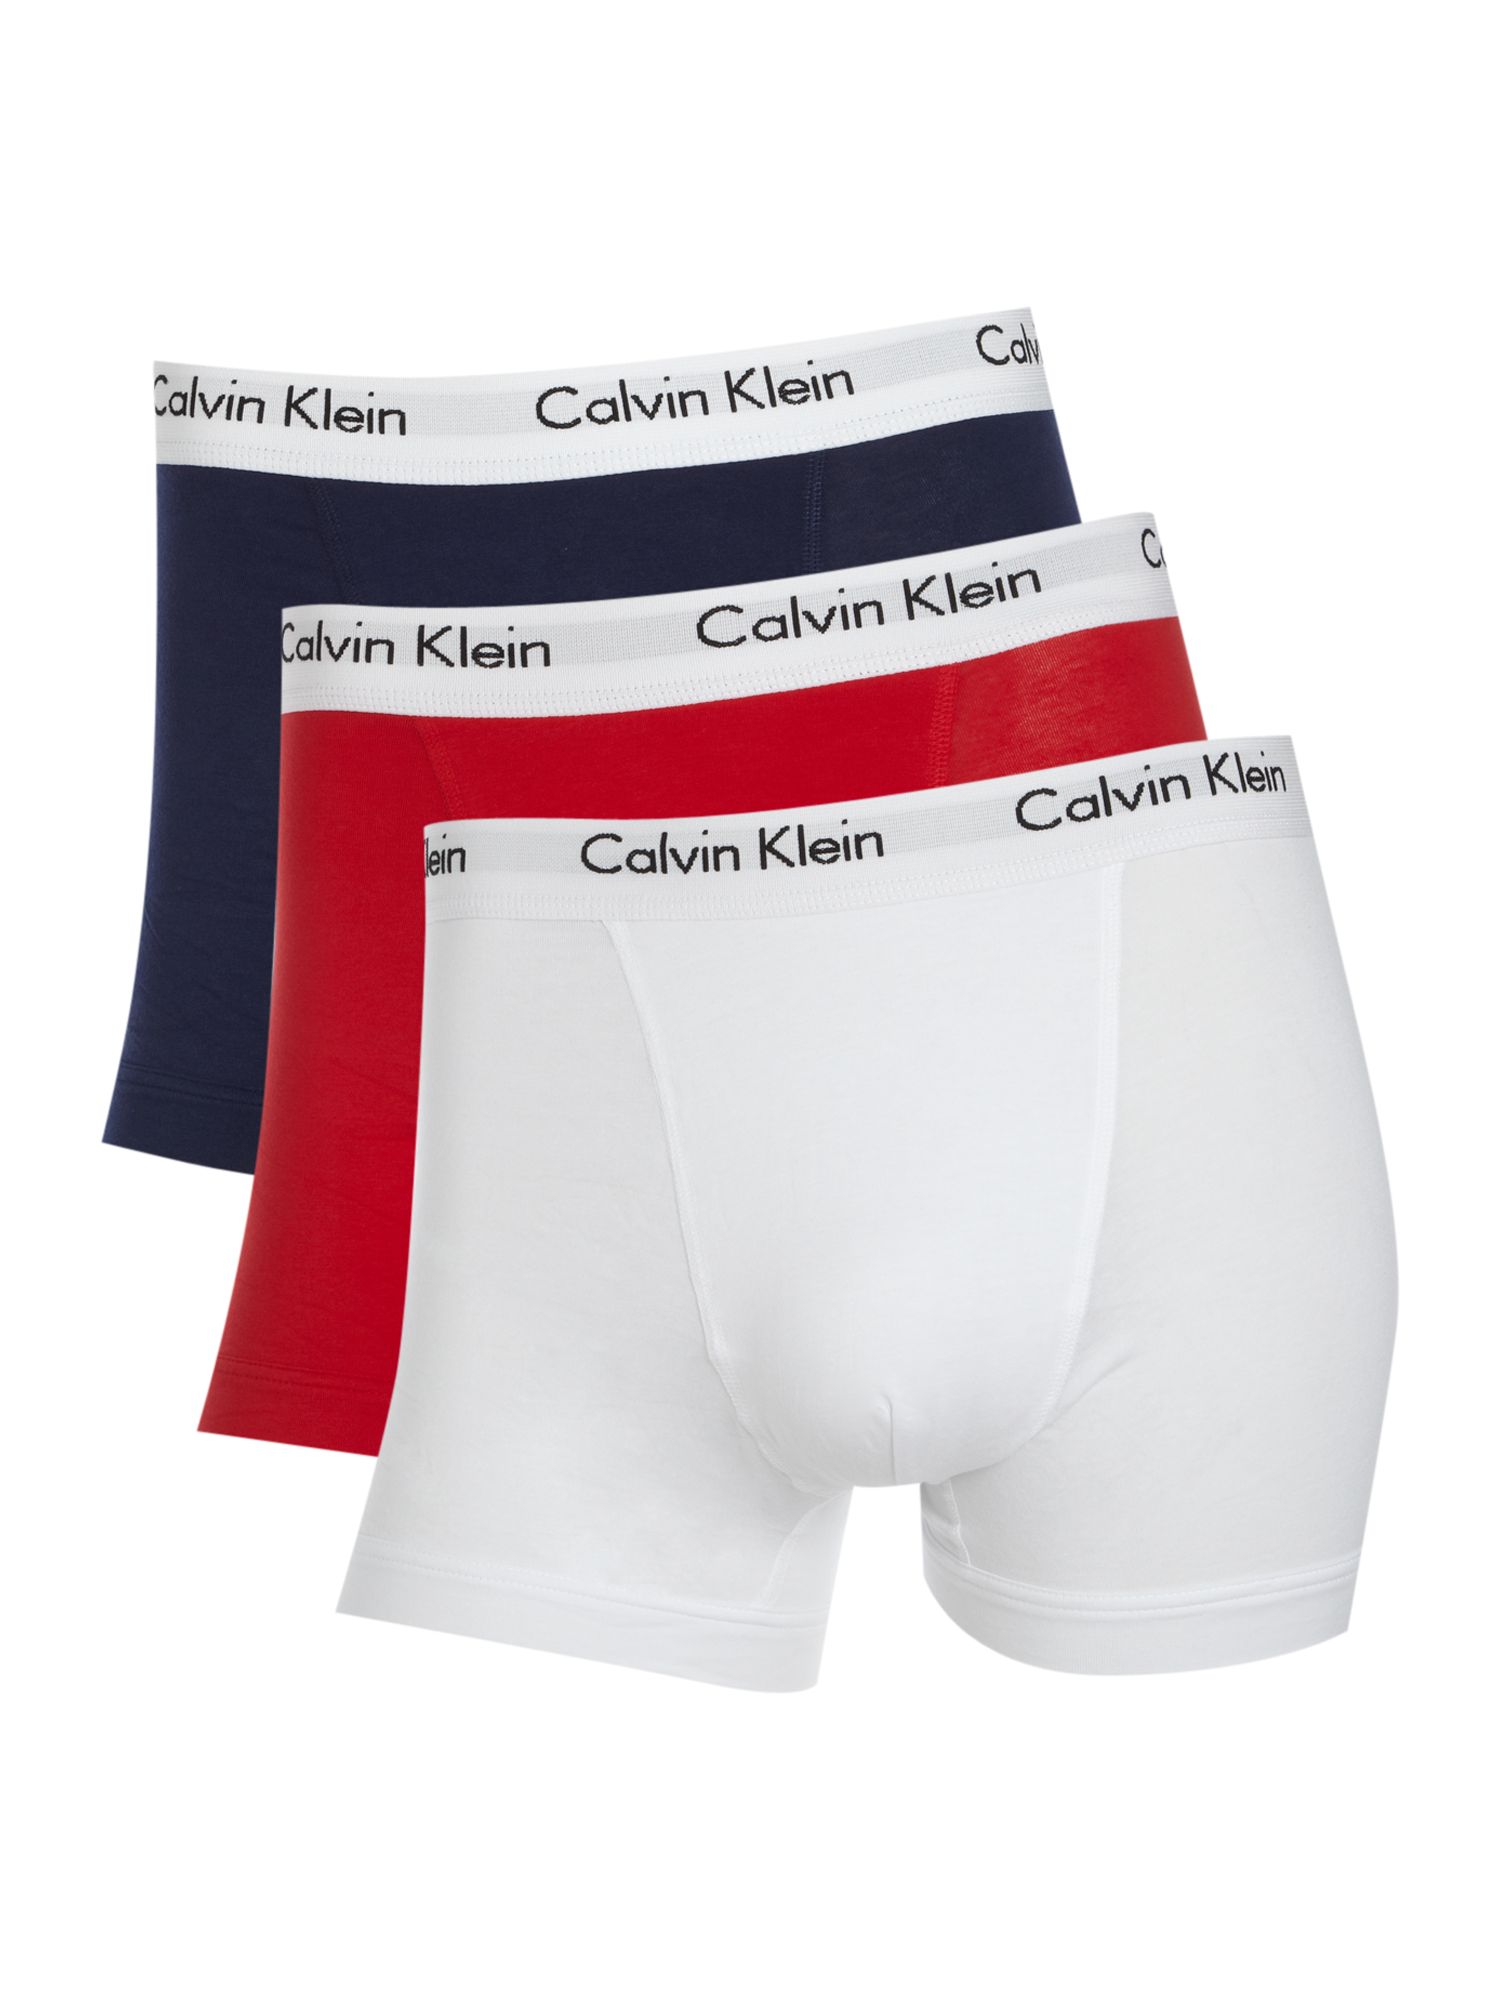 Calvin Klein 3 Pack Underwear Trunk Set In Multicolor For Men Multi